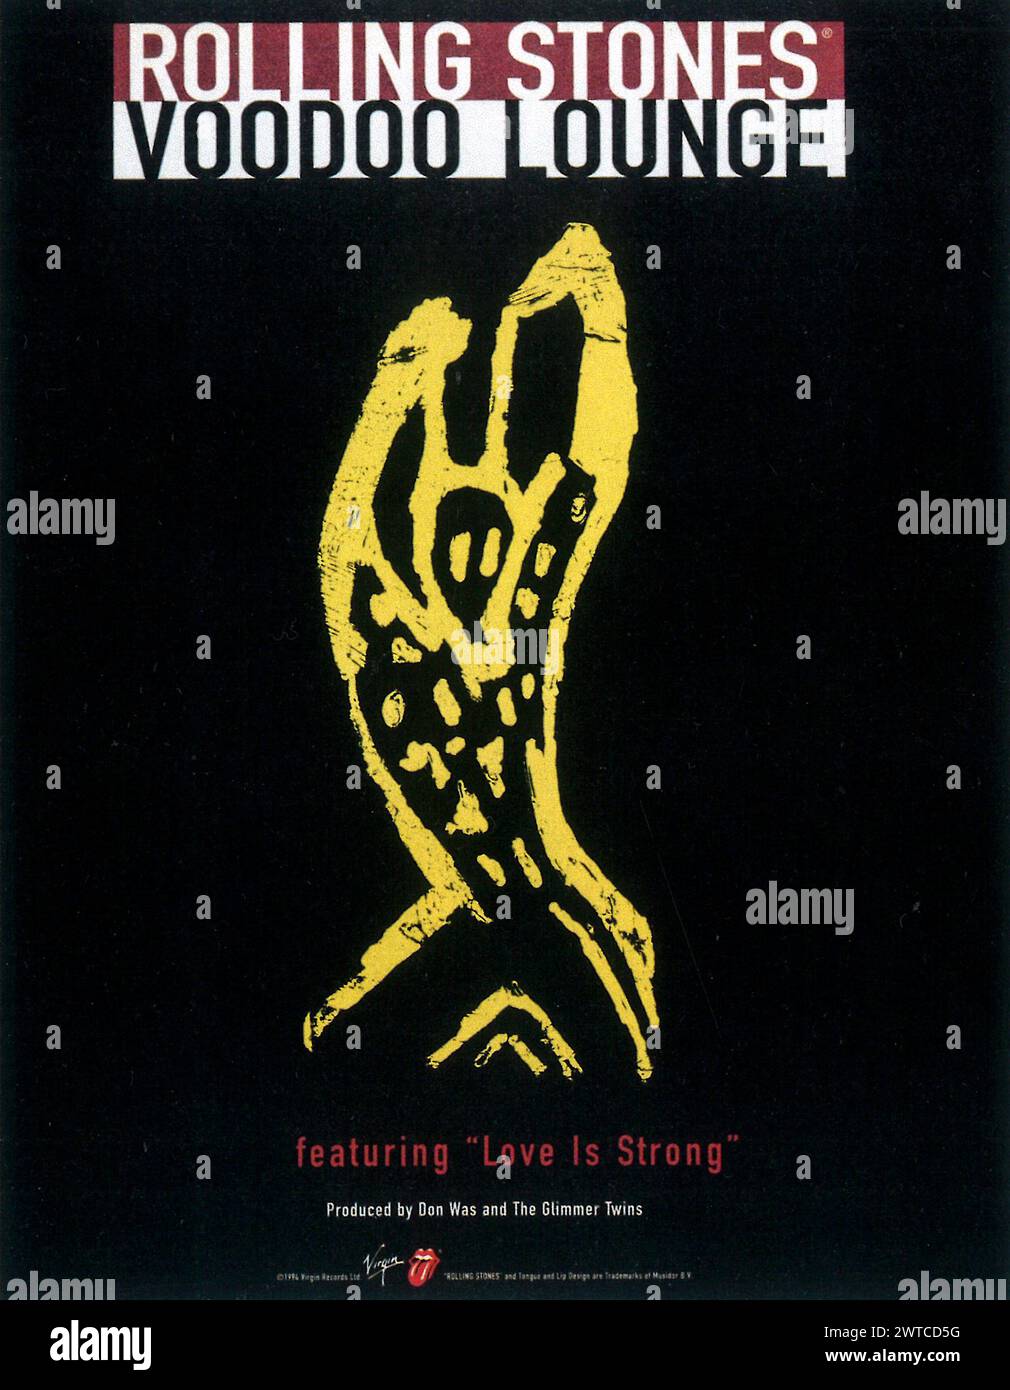 1994 Rolling Stones Voodoo Lounge album poster ad Stock Photo